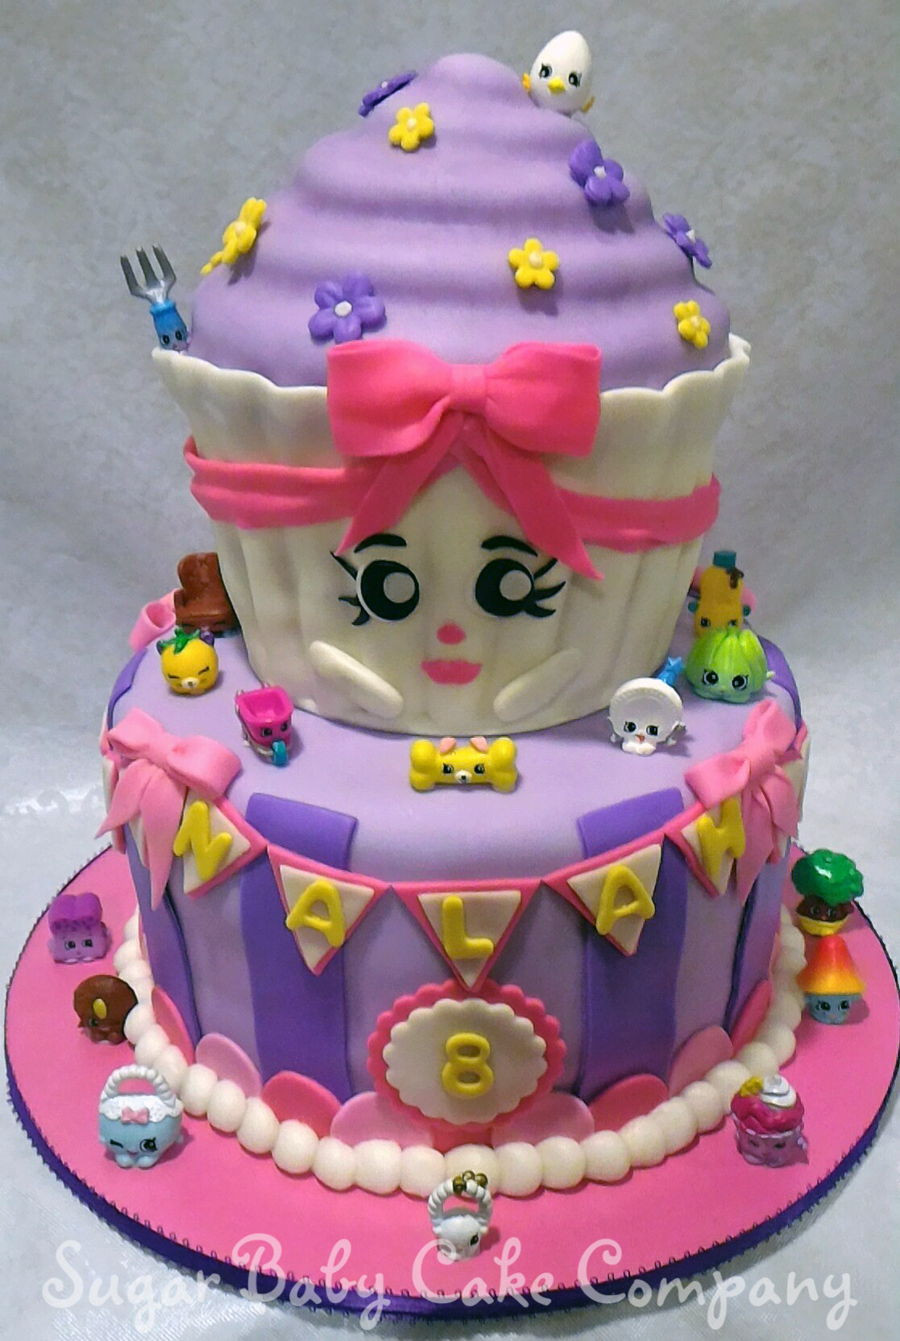 Best ideas about Shopkins Birthday Cake Ideas
. Save or Pin Shopkins Birthday Cake CakeCentral Now.